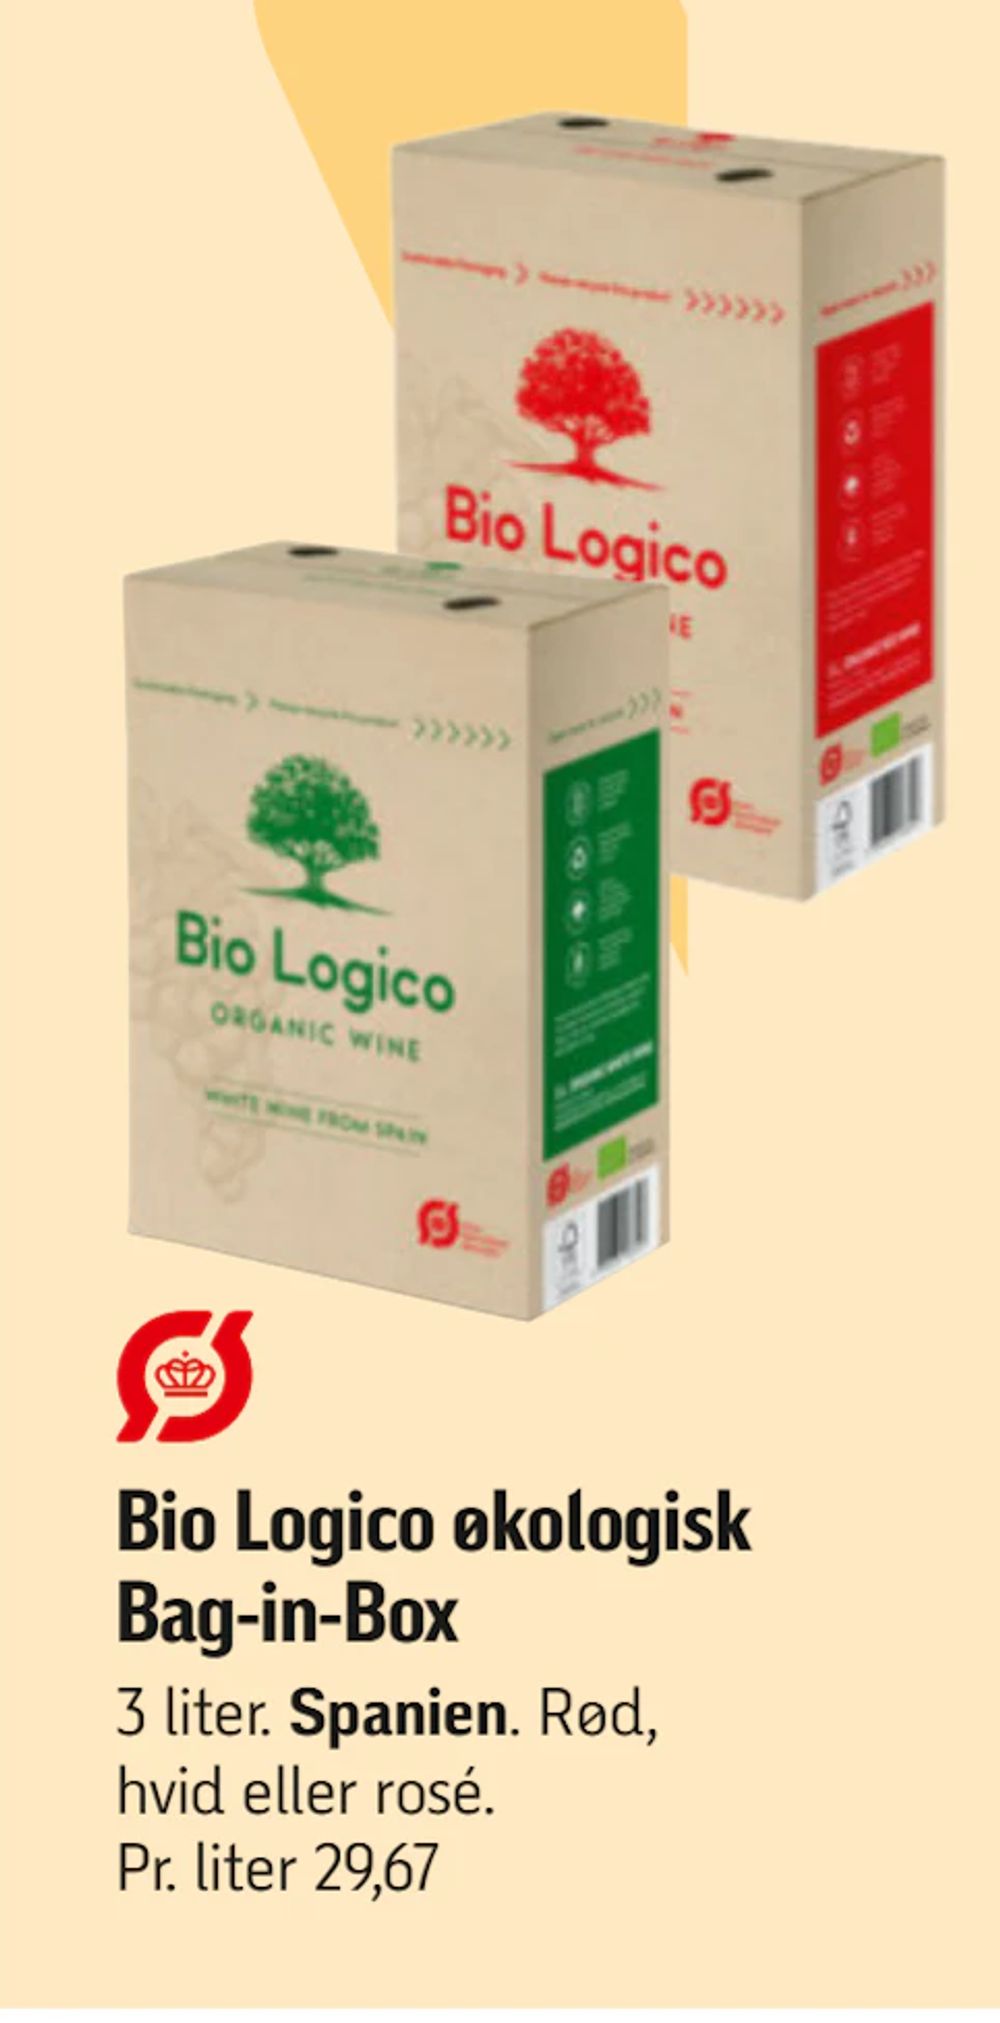 Tilbud på Bio Logico økologisk Bag-in-Box fra føtex til 89 kr.